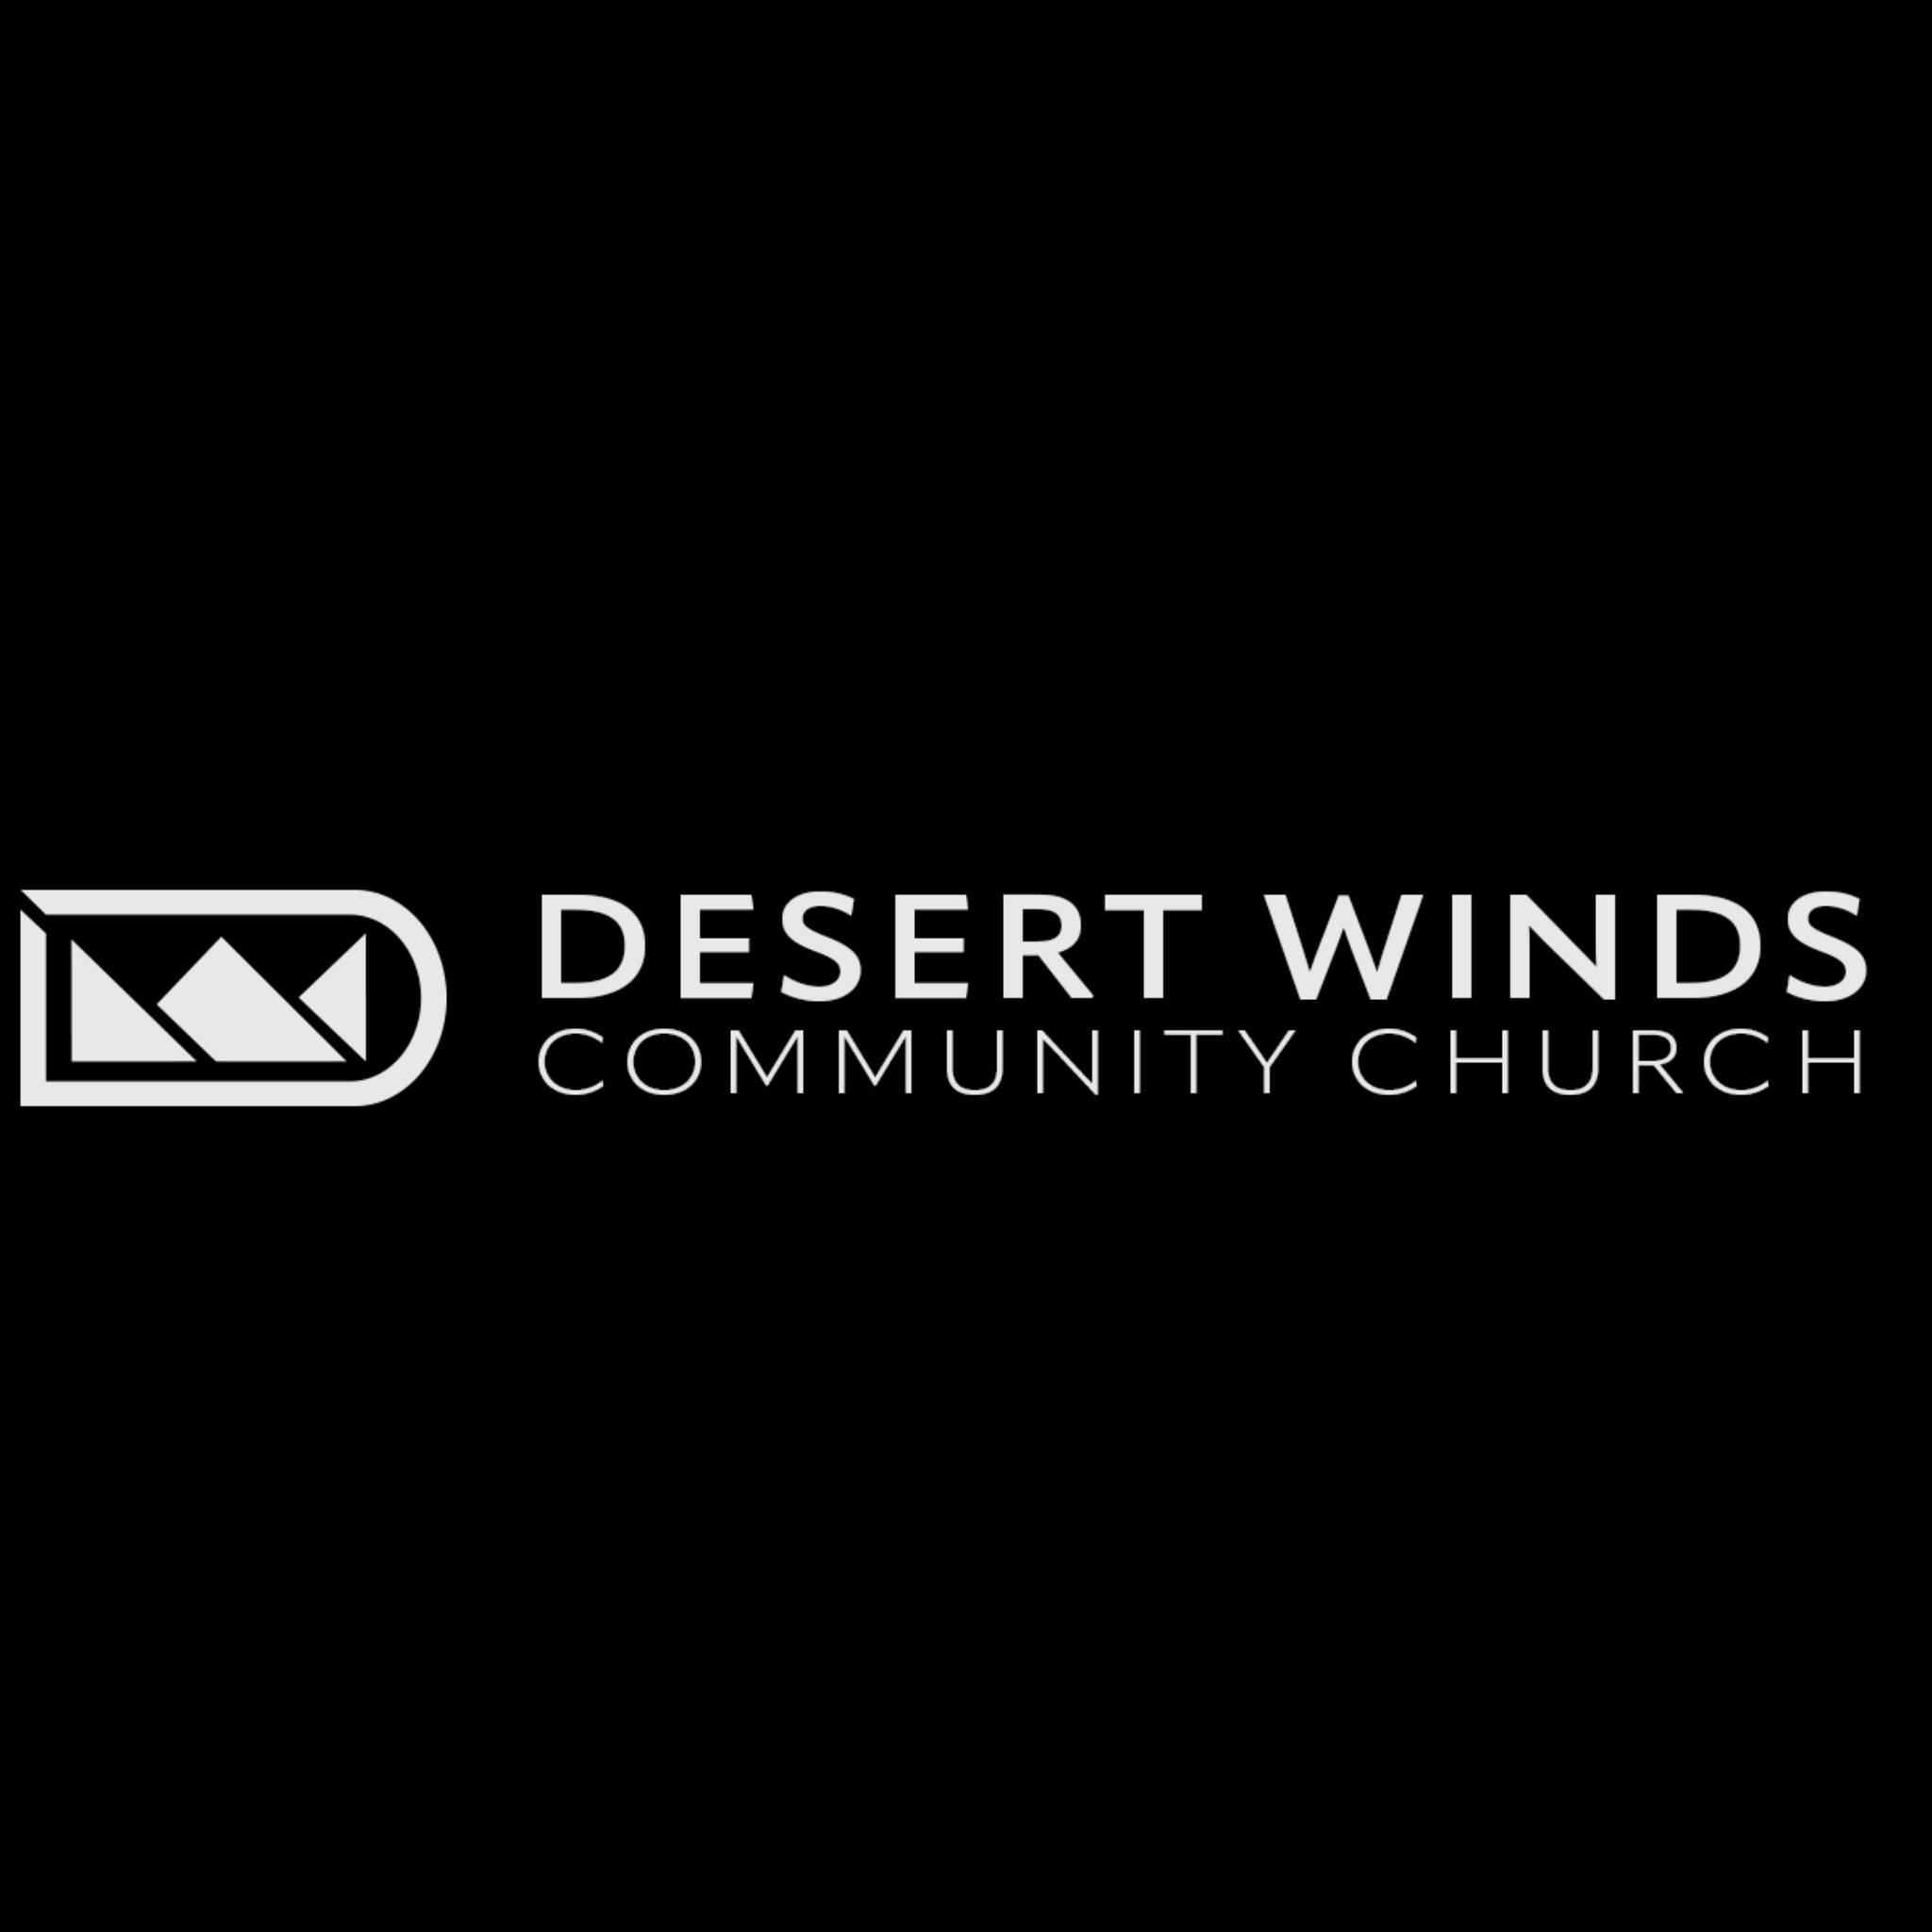 Desert Winds Community Church Soup Kitchen